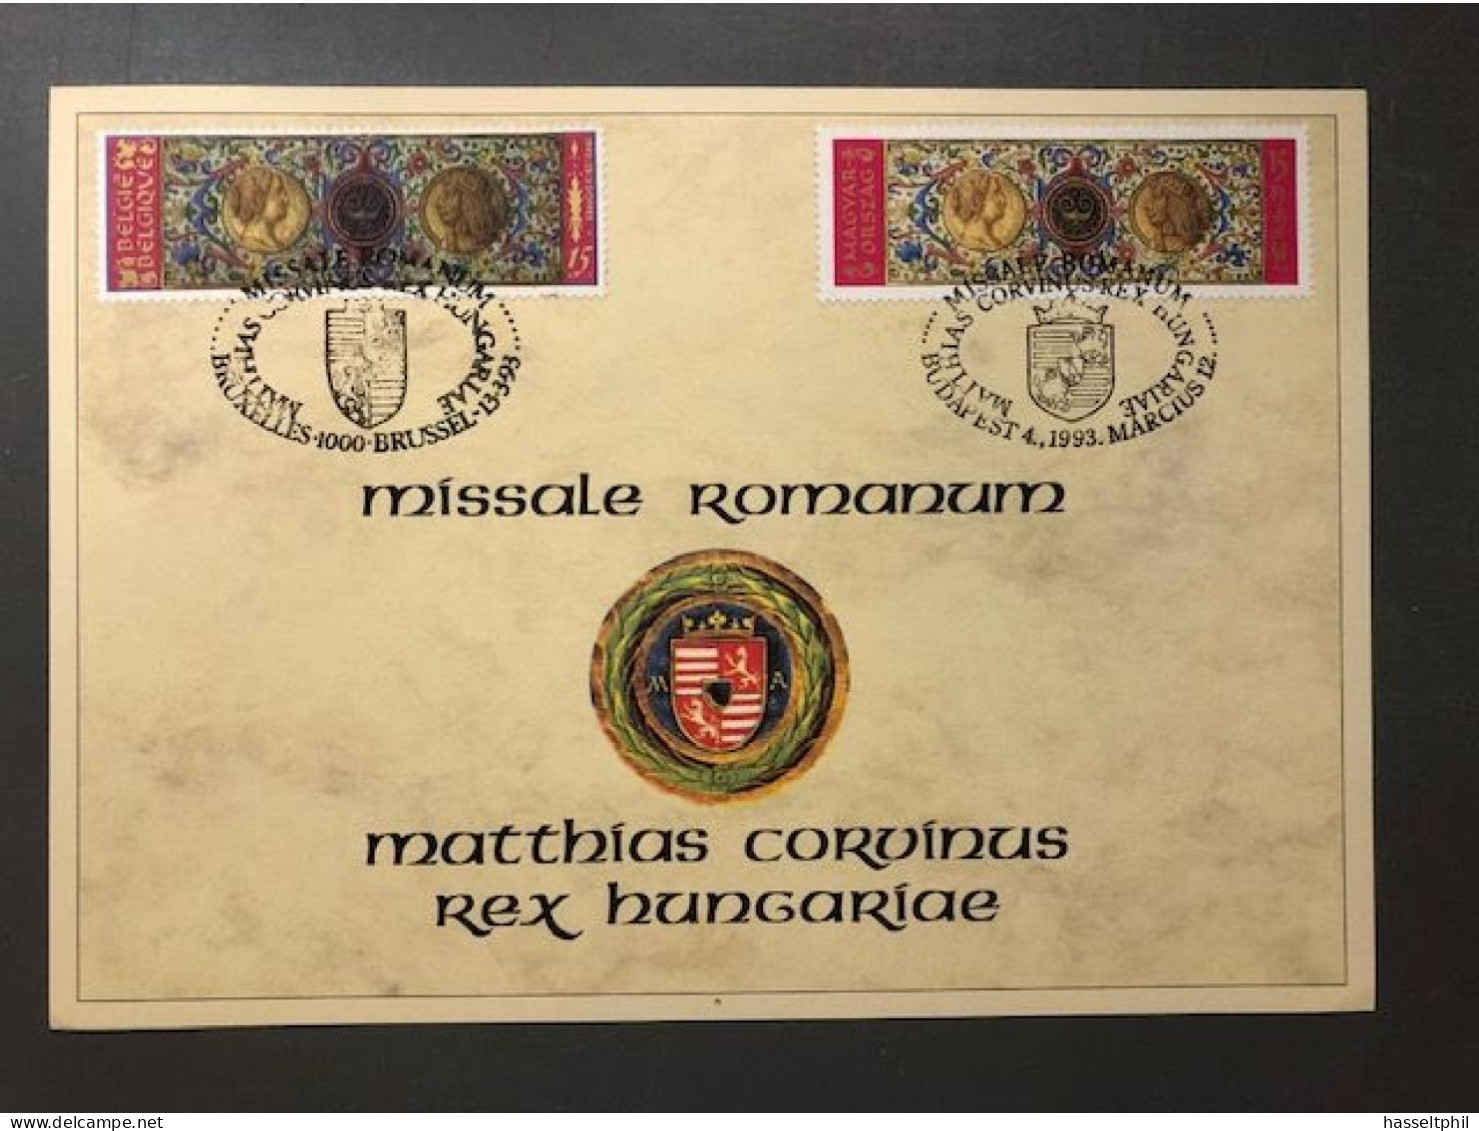 Belgie - Hongarije 2492 HK Herdenkingskaart Van Hongarije - Carte Souvenir D' Hongrie  -  Missalum Romanum 1993 - Cartoline Commemorative - Emissioni Congiunte [HK]